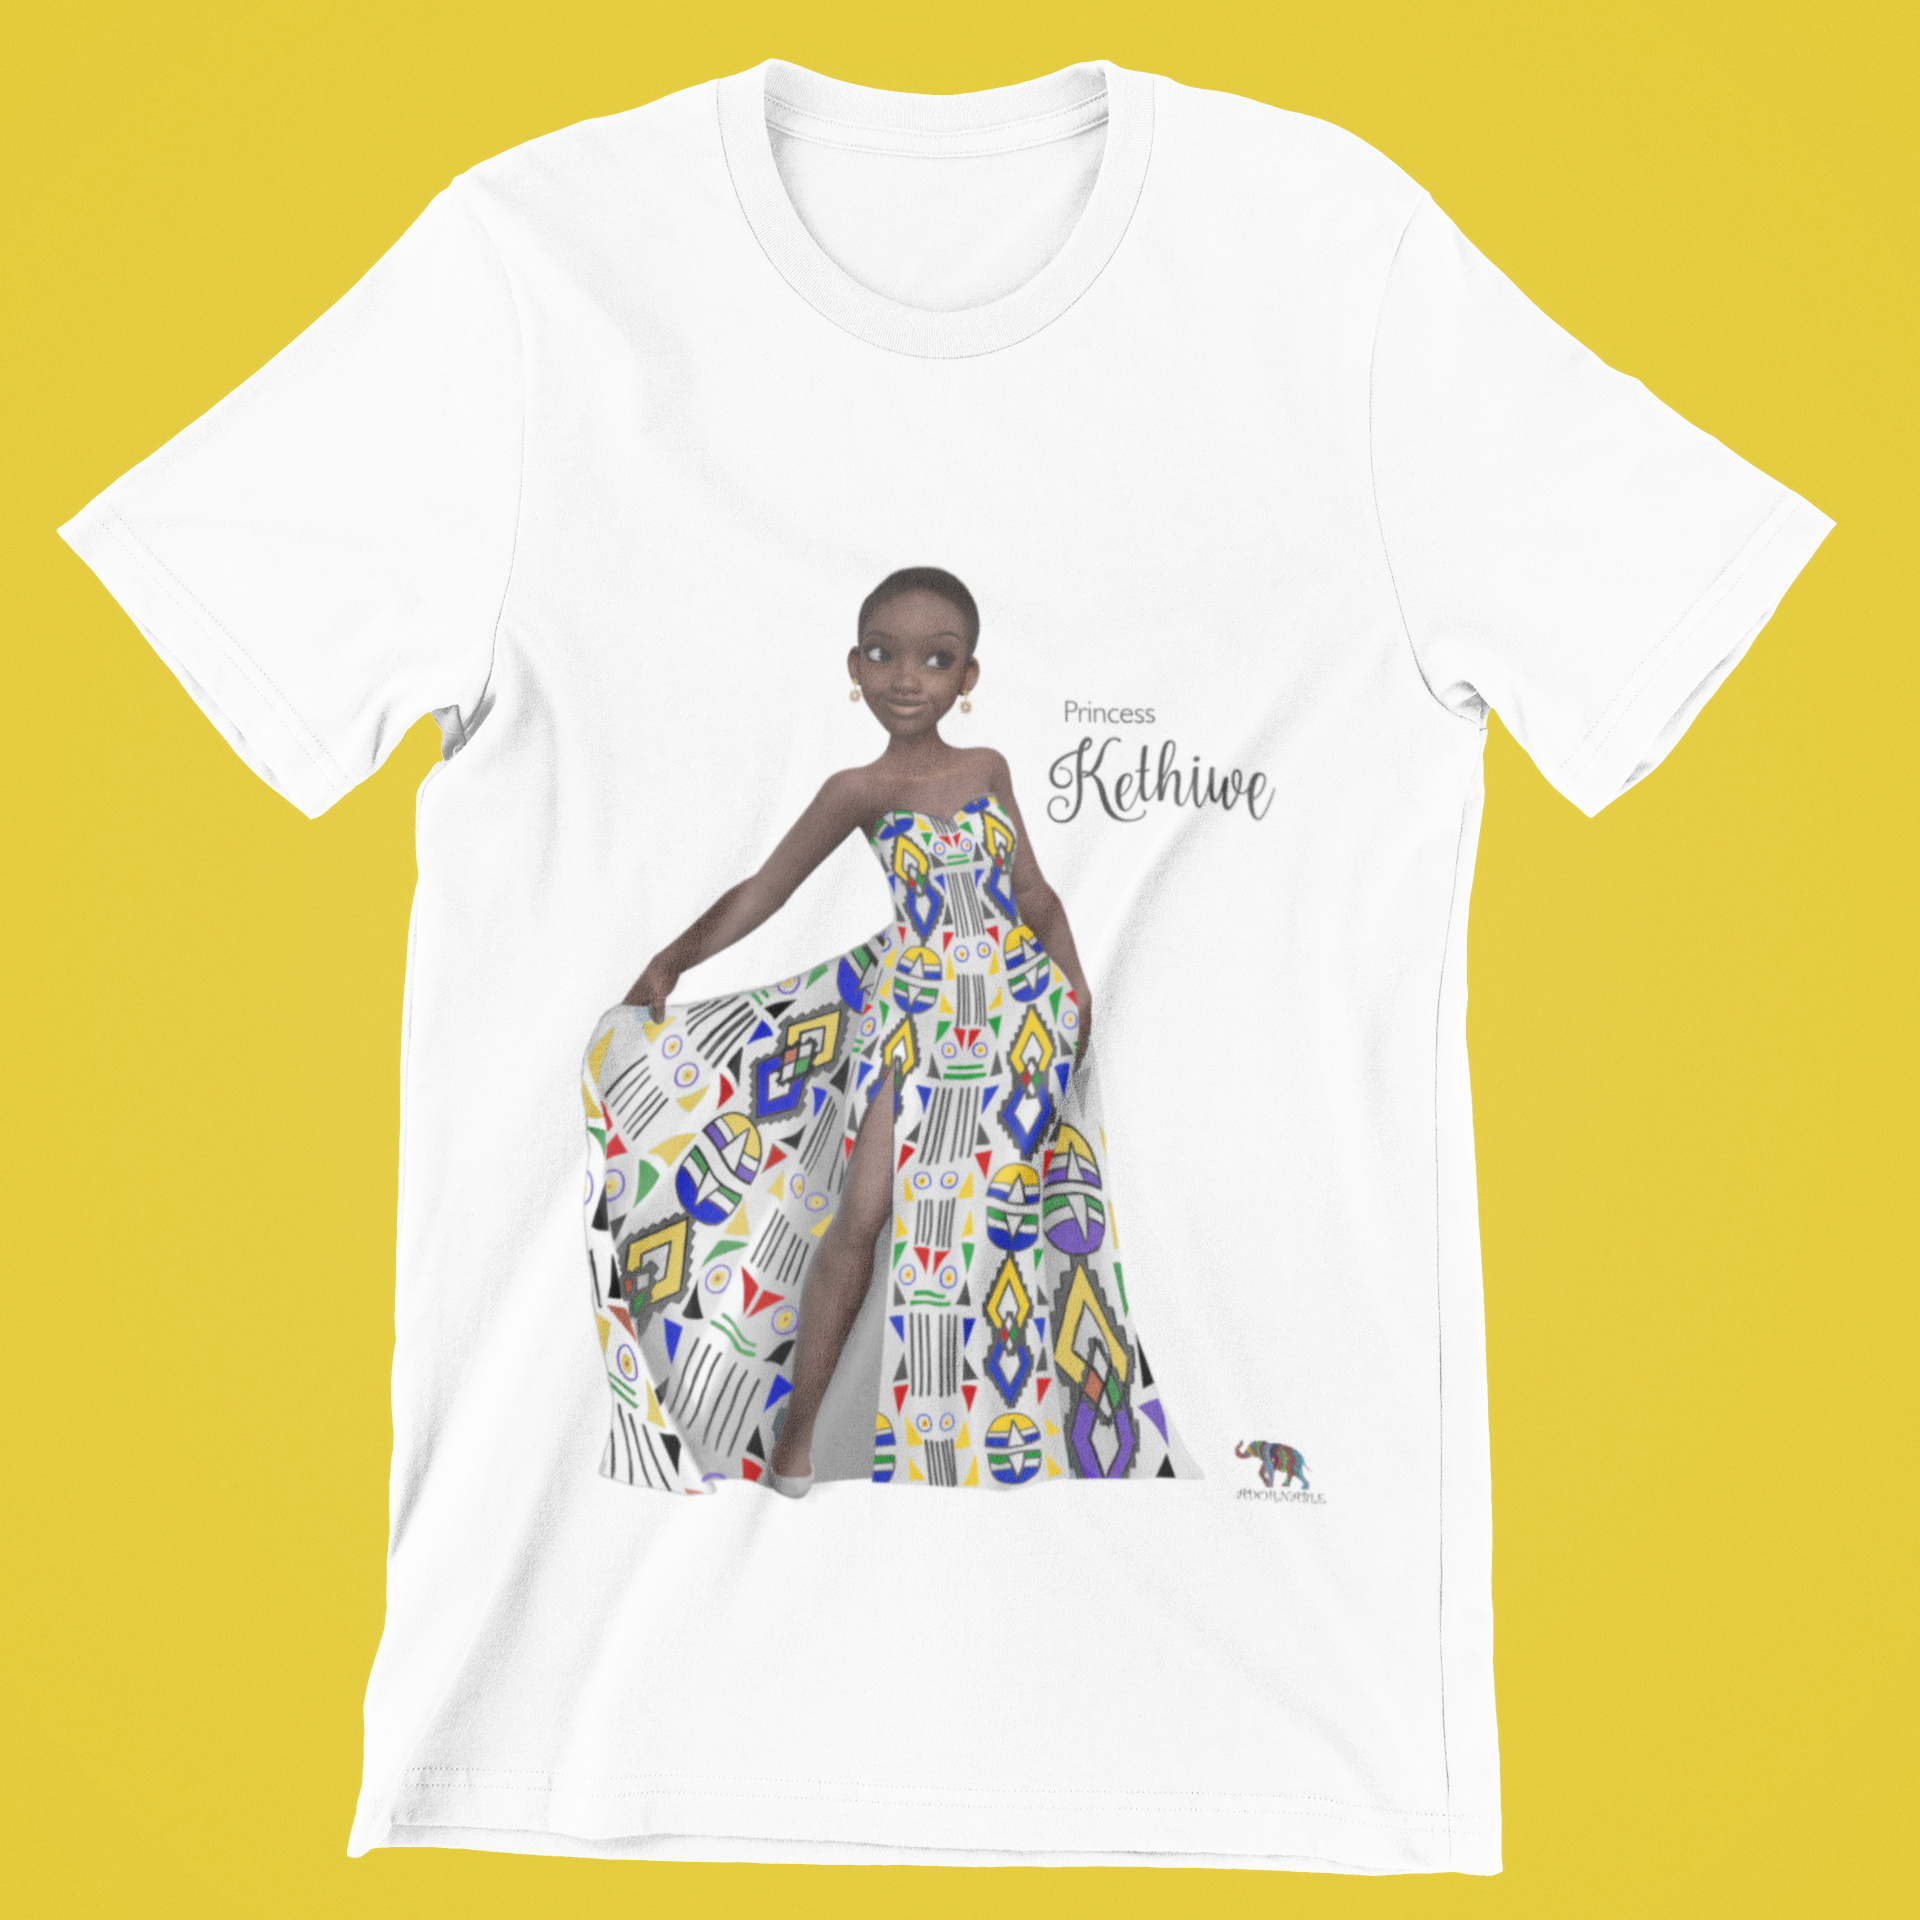 Uncrowned Princess Kethiwe Short Sleeve t-shirt